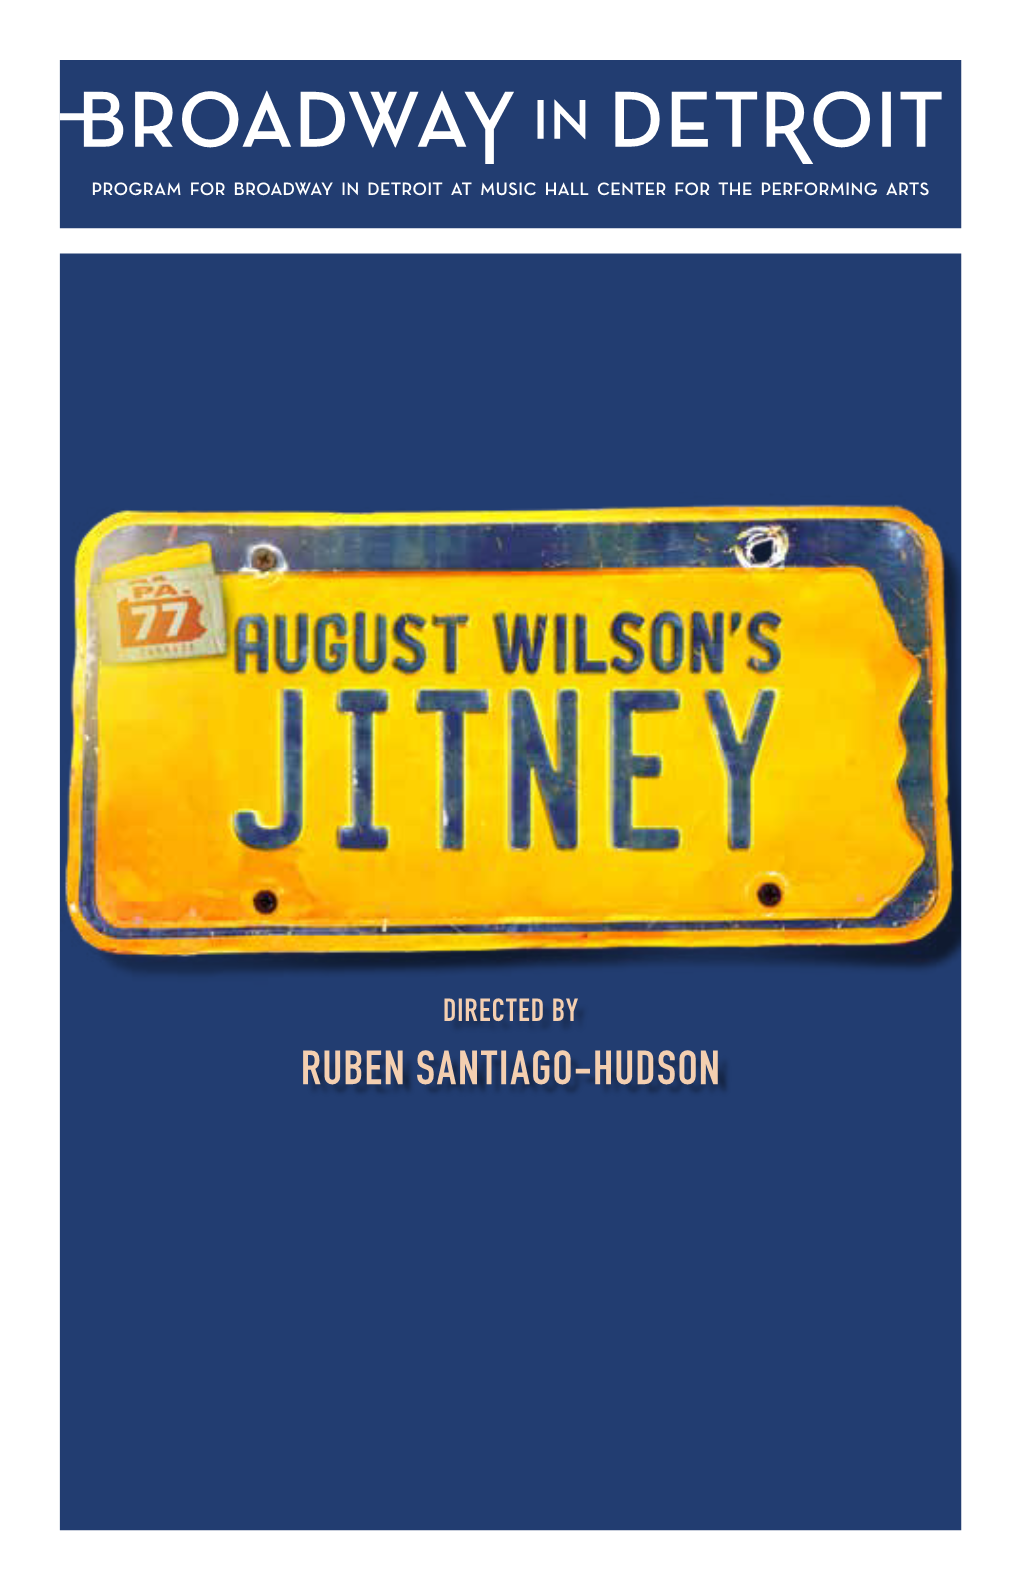 RUBEN SANTIAGO-HUDSON Tim Robbins & the Actors’ Gang Ensemble Bring the New Colossus to Music Hall Feb